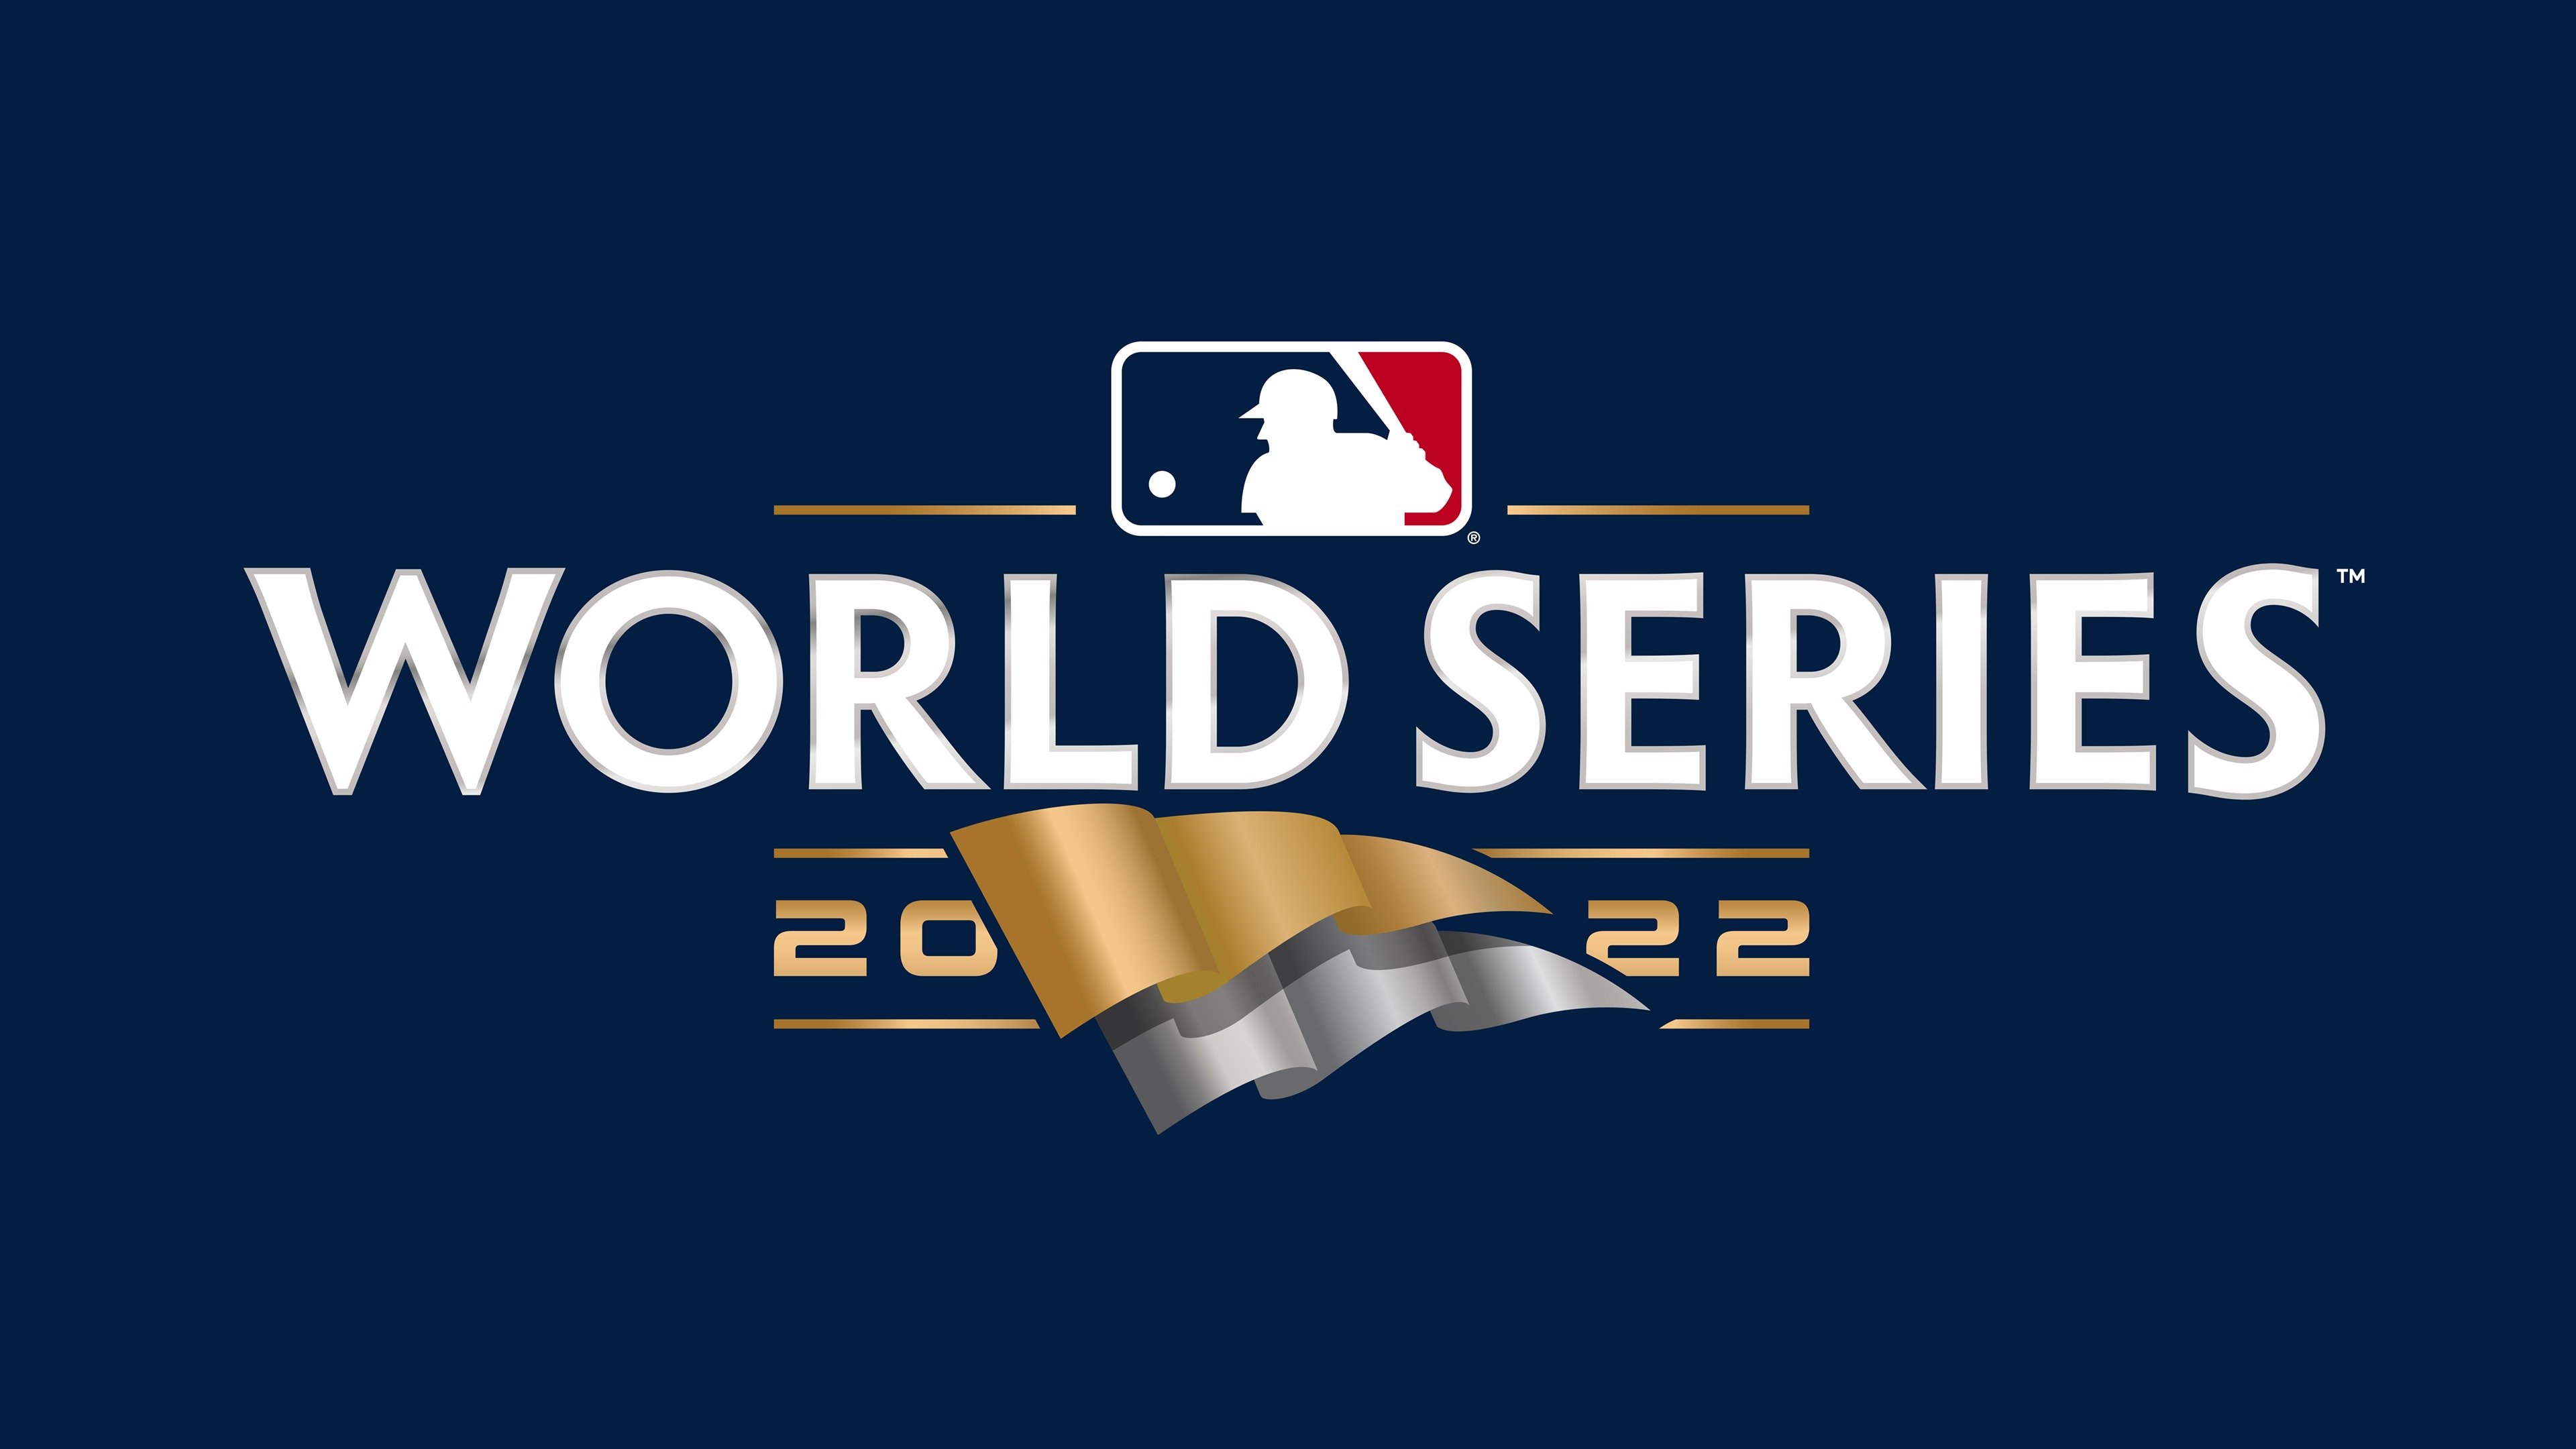 1998 World Series New York Yankees San Diego Padres 1986 World Series MLB  major league baseball logo sports signage png  PNGWing